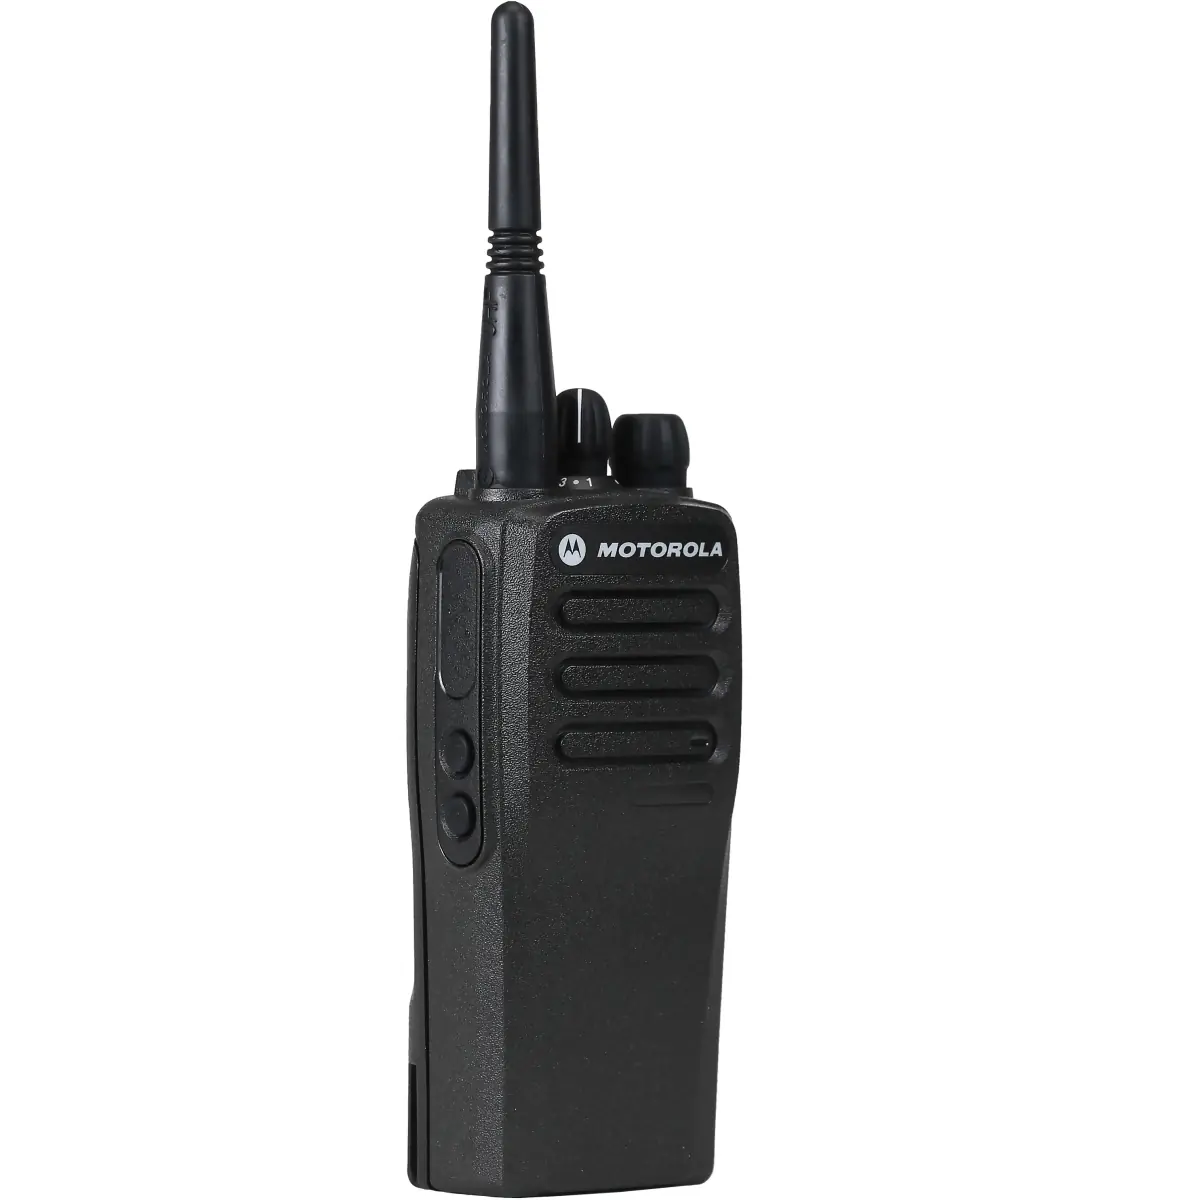 Motorola radio-DP1400